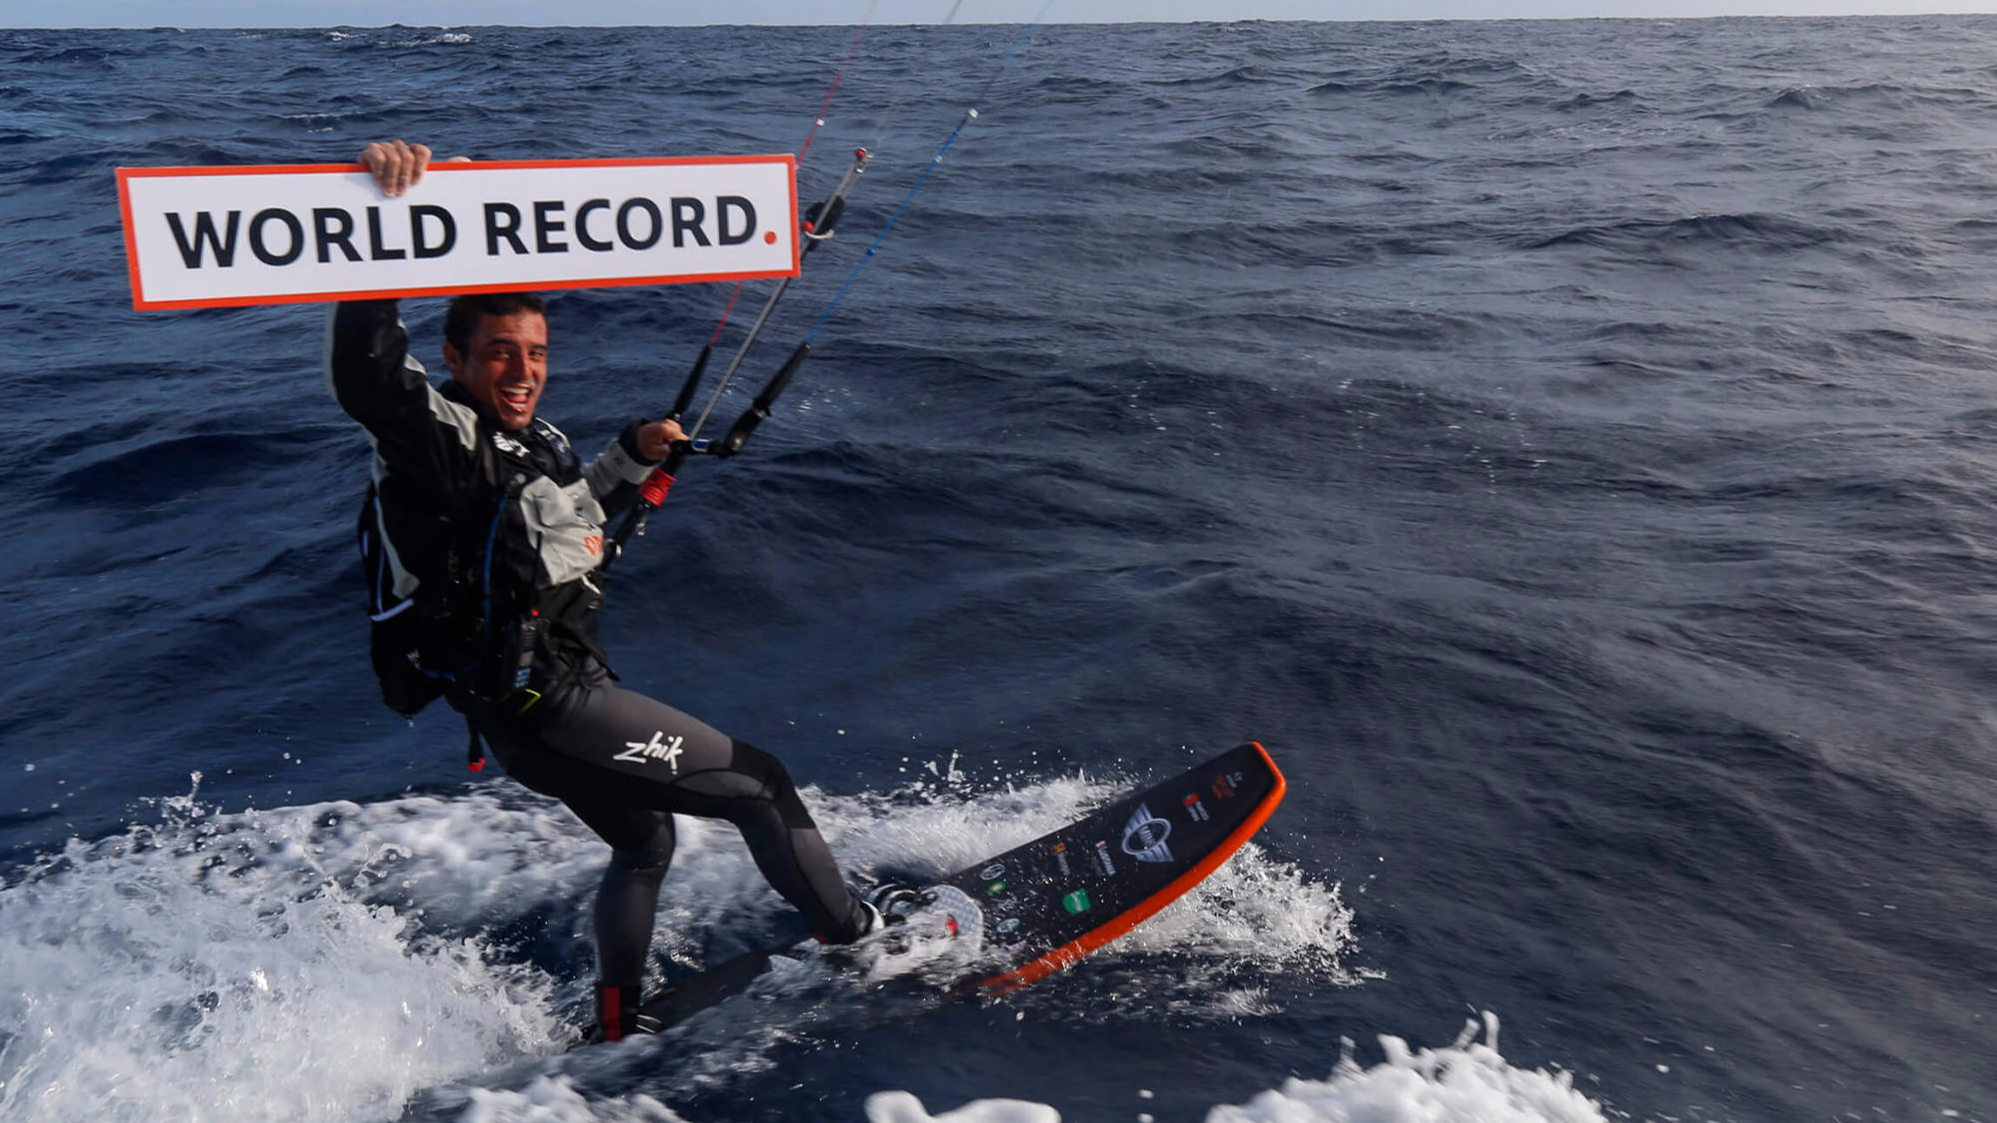 Lufinha Kitesurf World Record